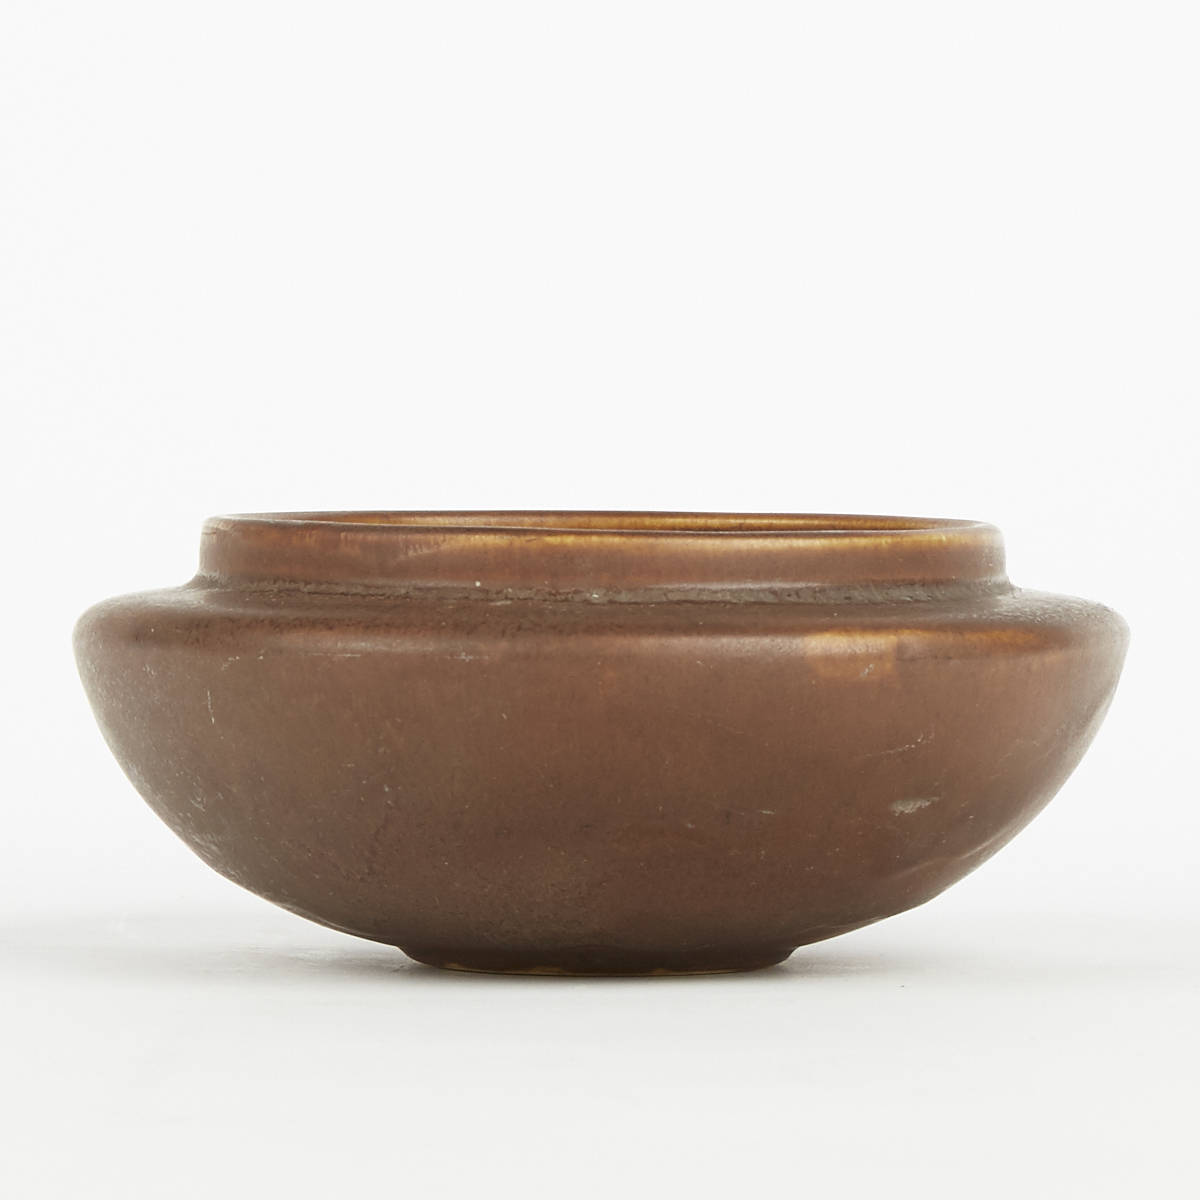 University of North Dakota 1912 Pottery Bowl - Image 4 of 5